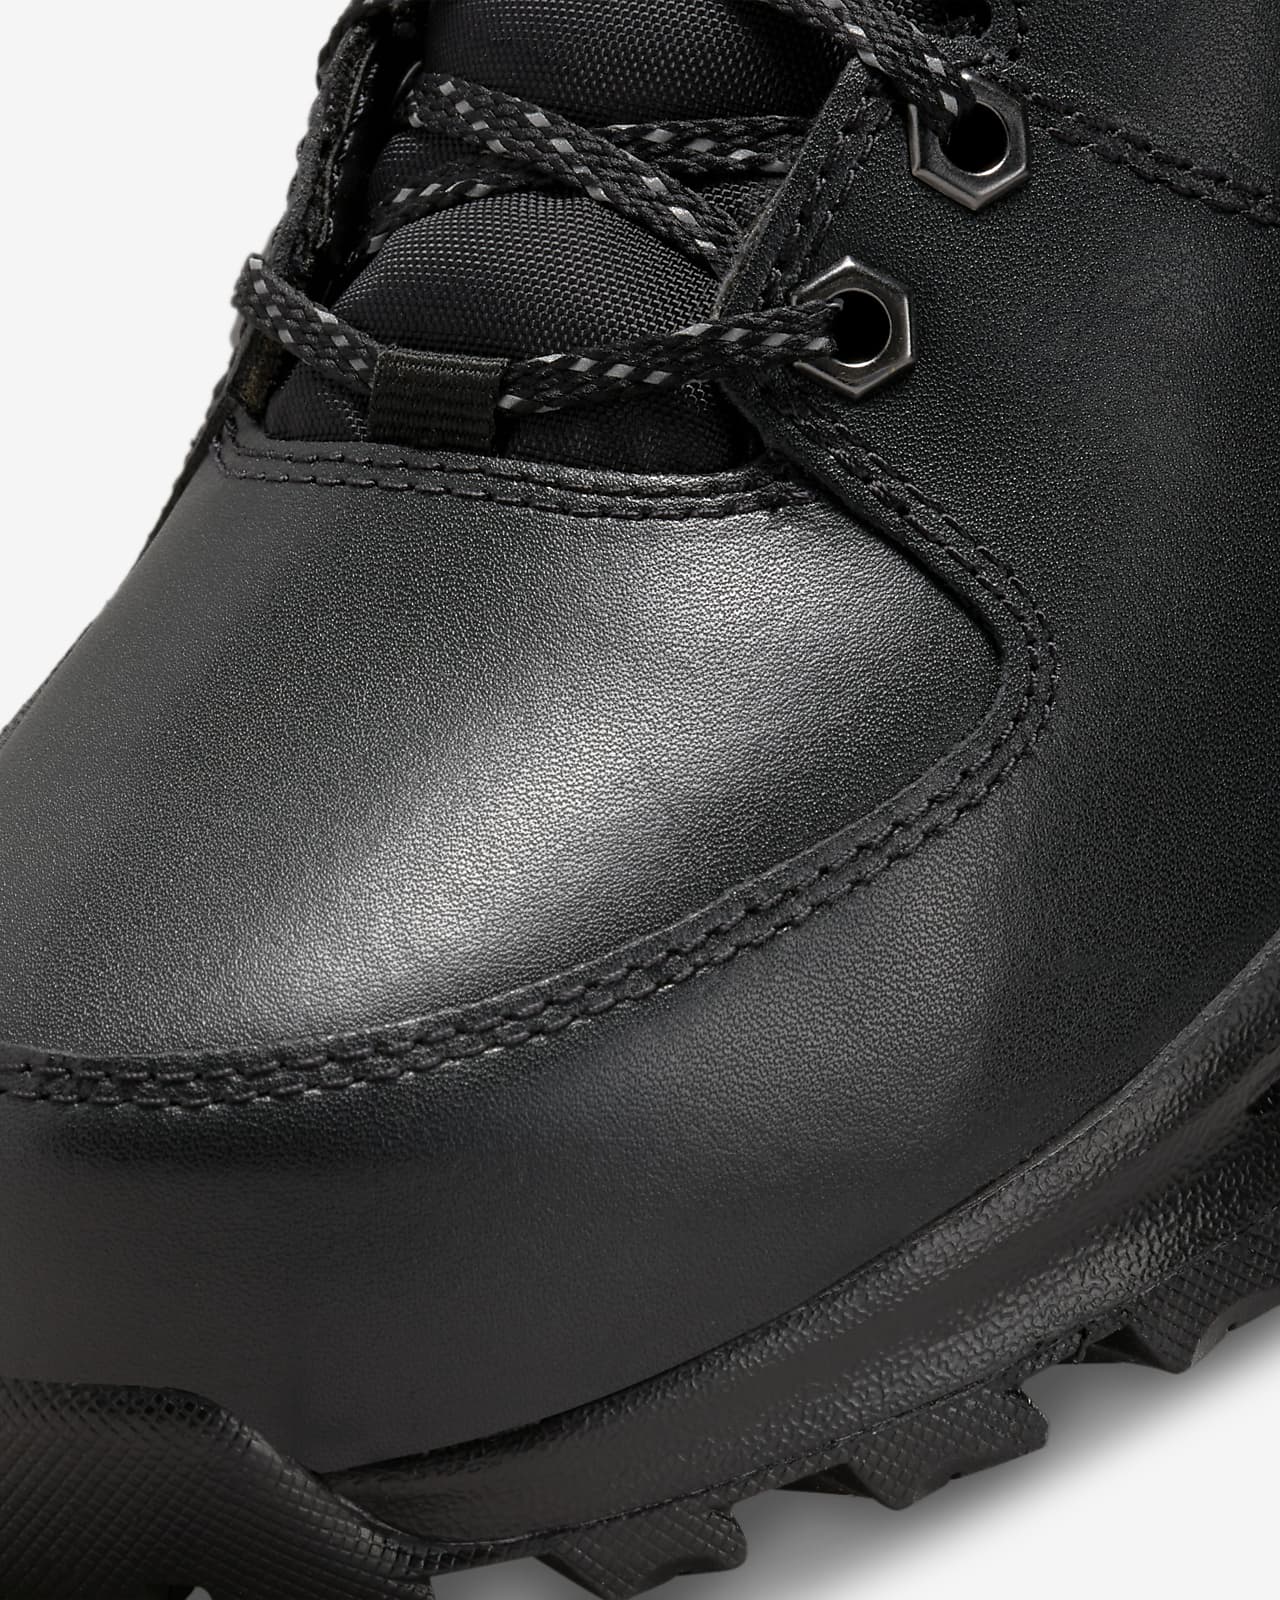 Nike Manoa Leather SE Men's Boots.